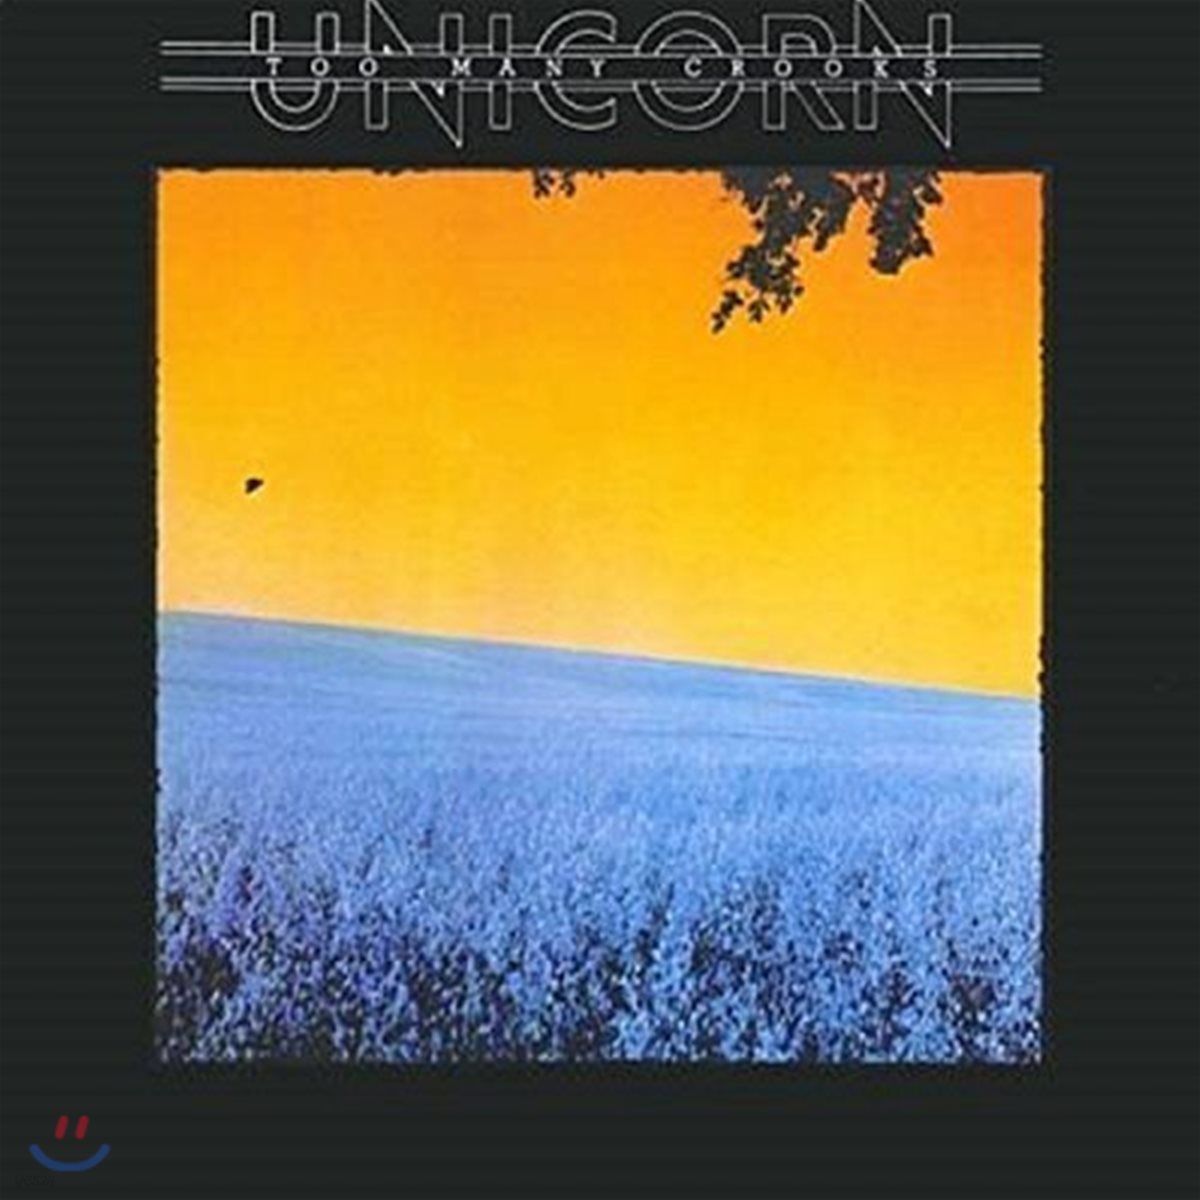 Unicorn (유니콘) - Too Many Crooks [Remastered Edition]